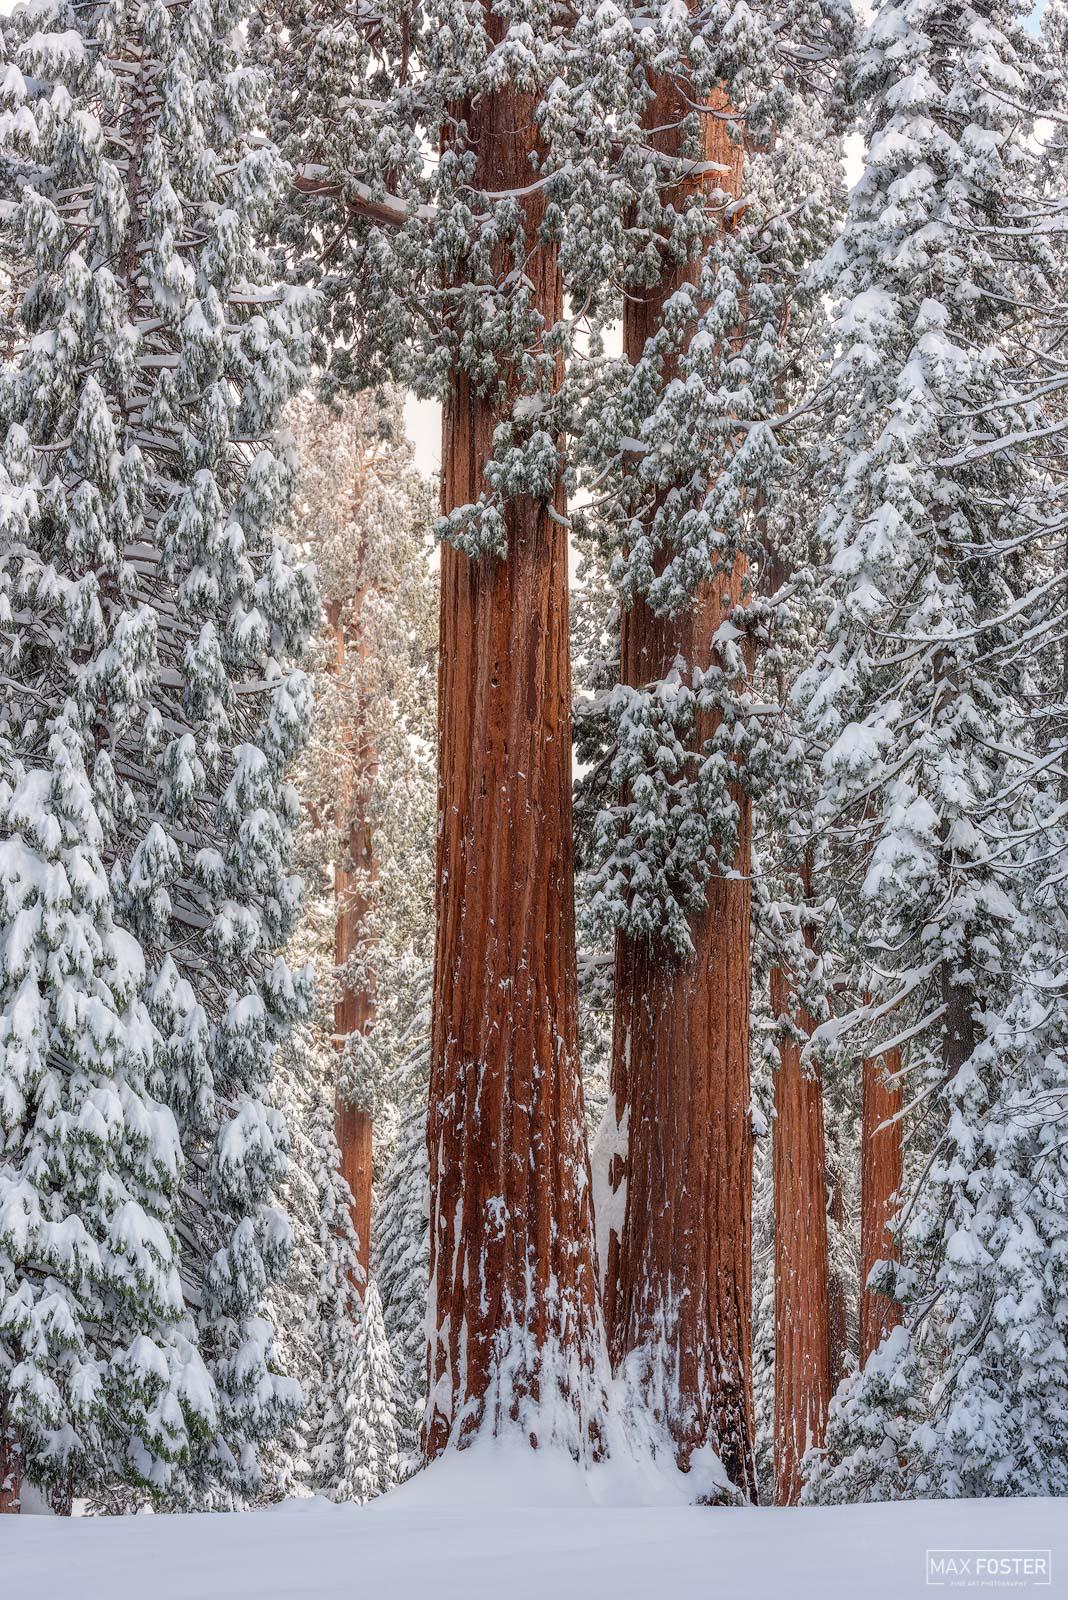 Nature Landscape Trees Branch Portrait Display Winter Snow California Sequoias Max Foster 1068x1600